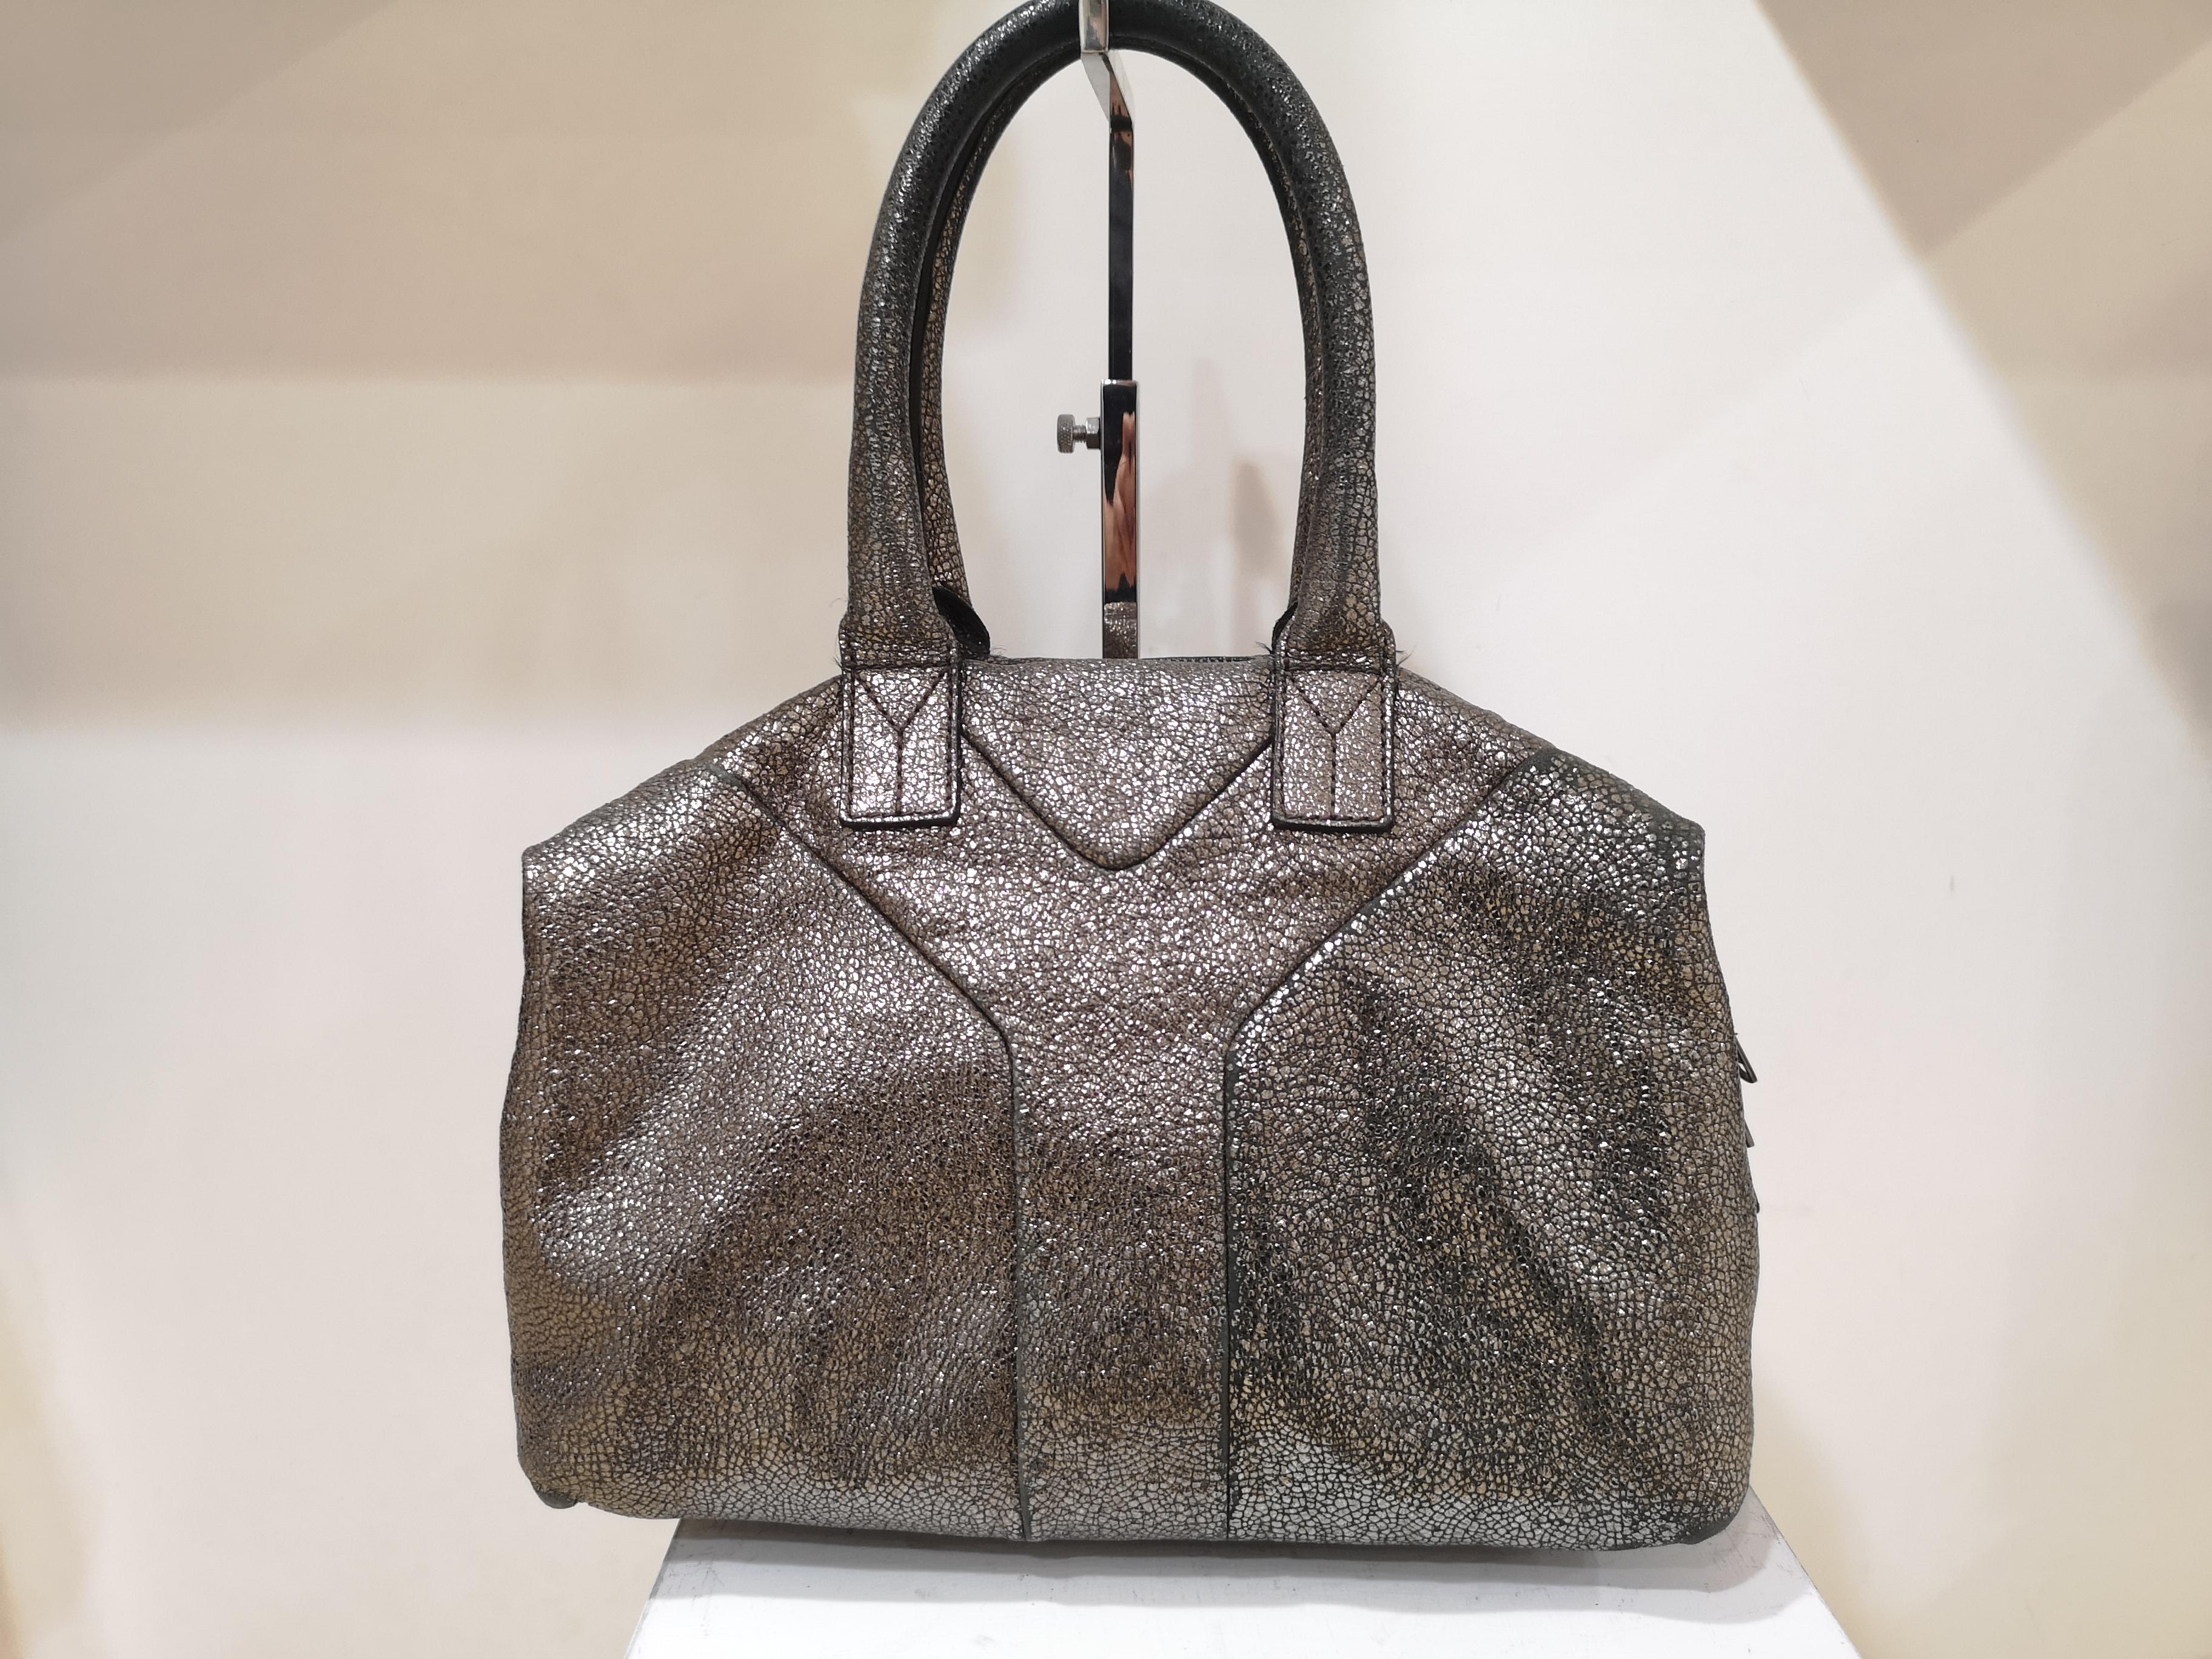 Yves Saint Laurent Silver Bag 2